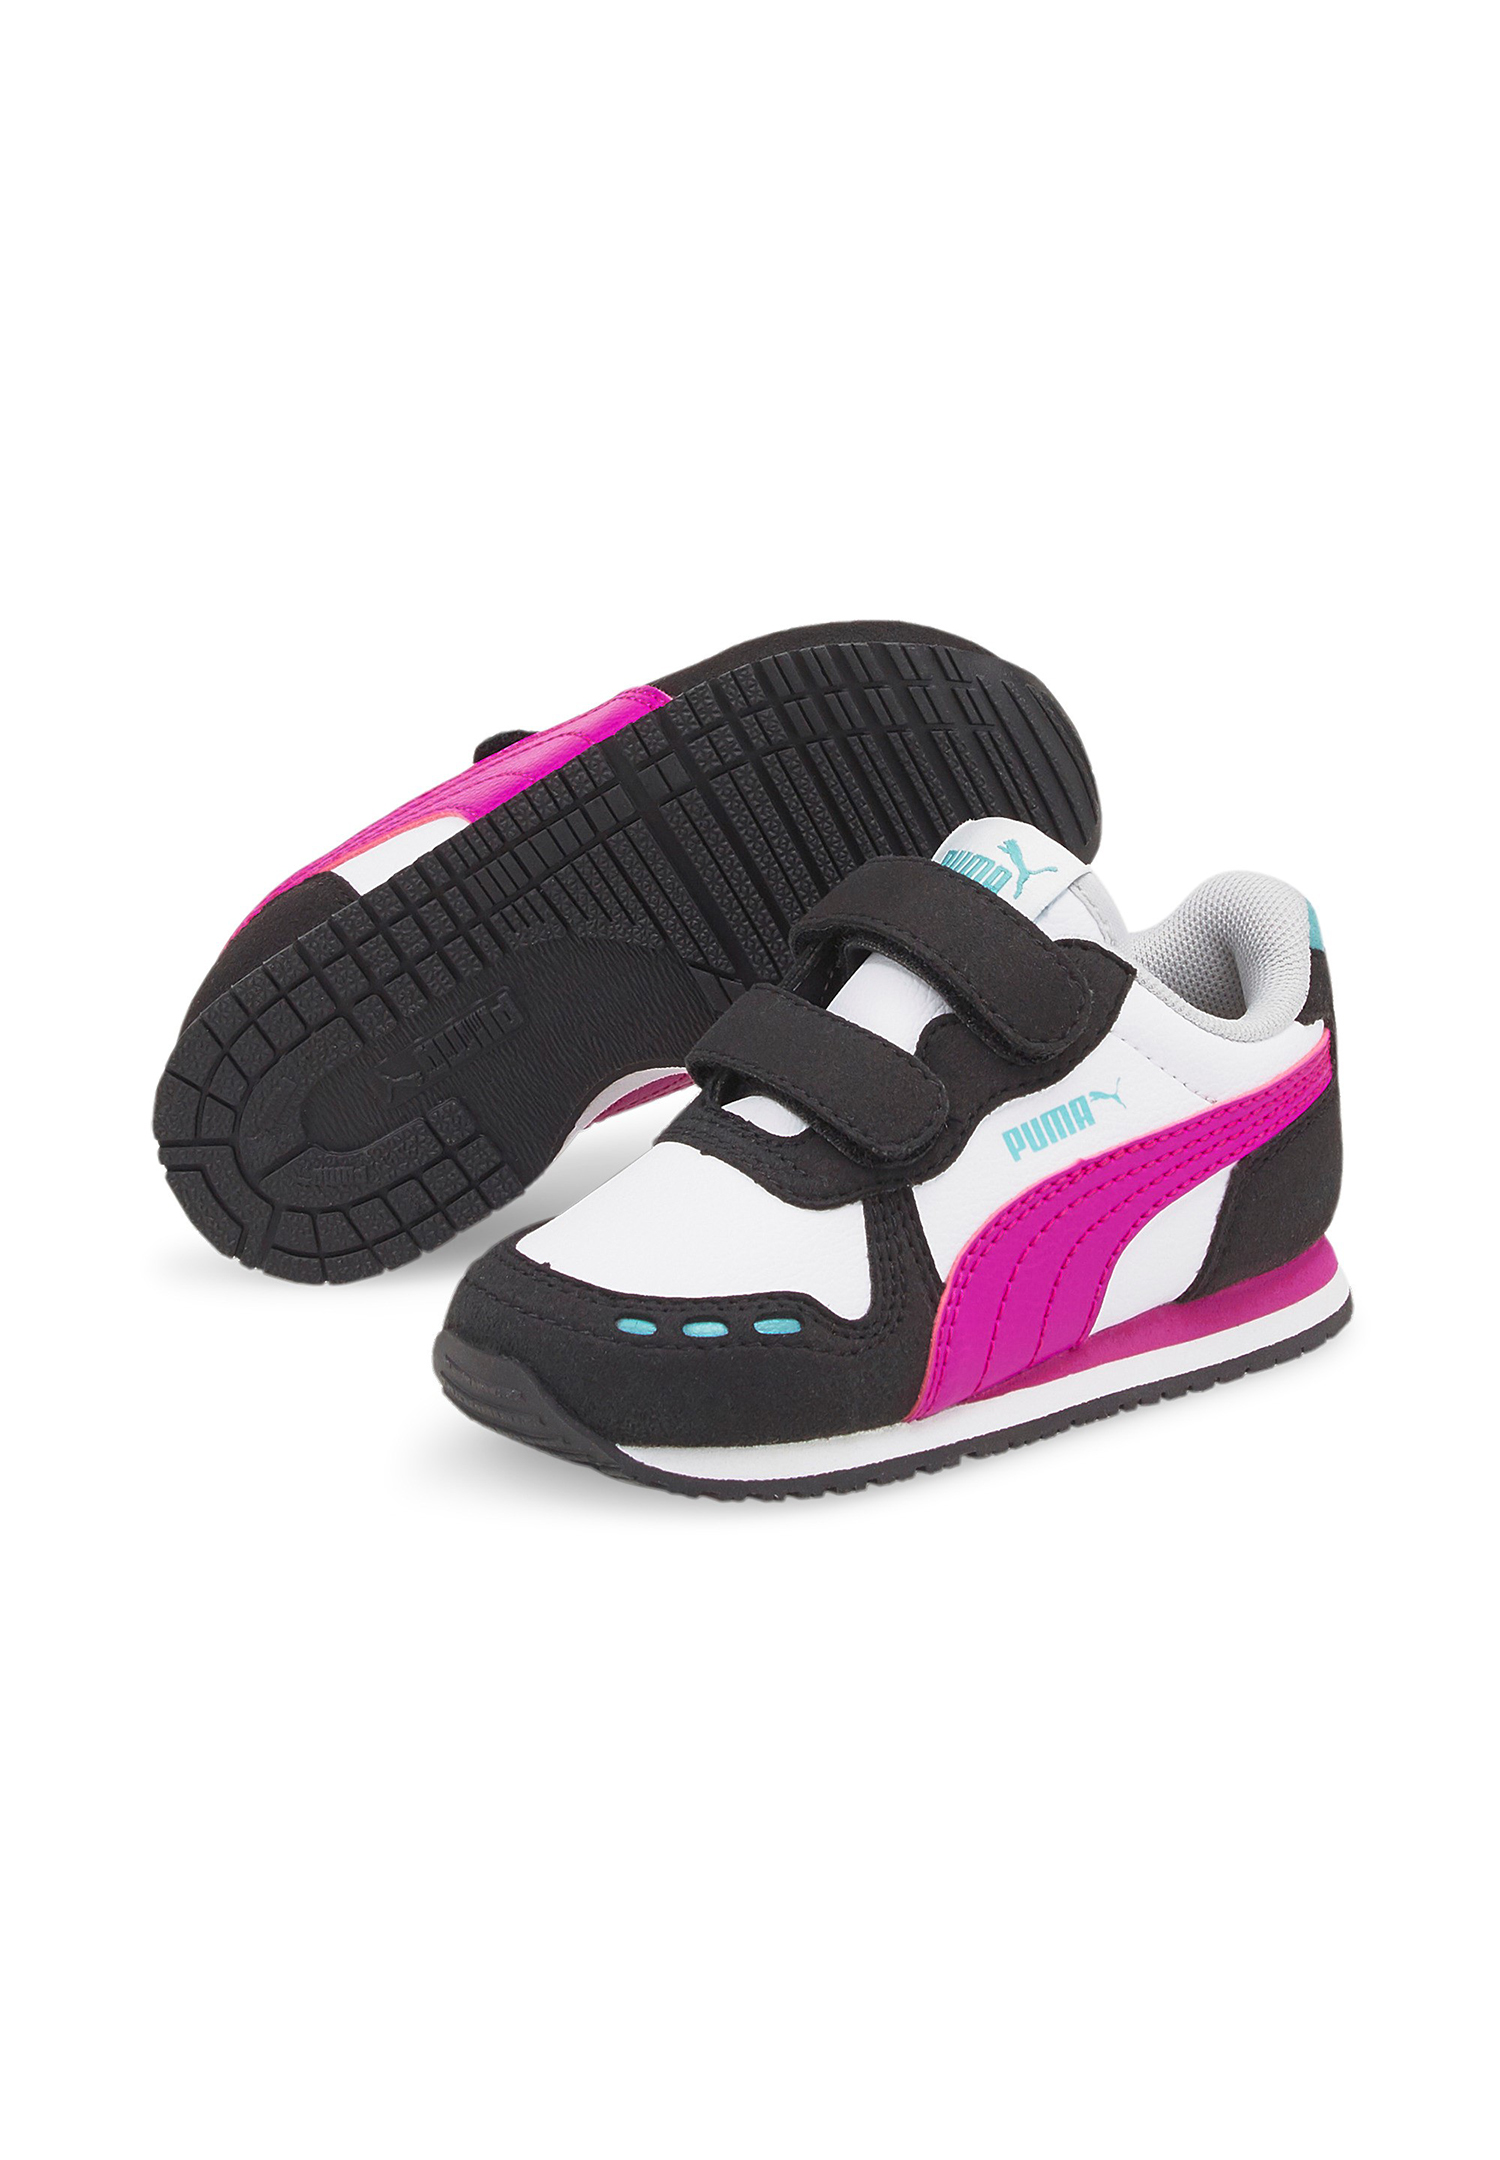 PUMA Cabana Racer SL 20 V Inf Kinder Sneaker Turnschuhe 383731 weiss/lila